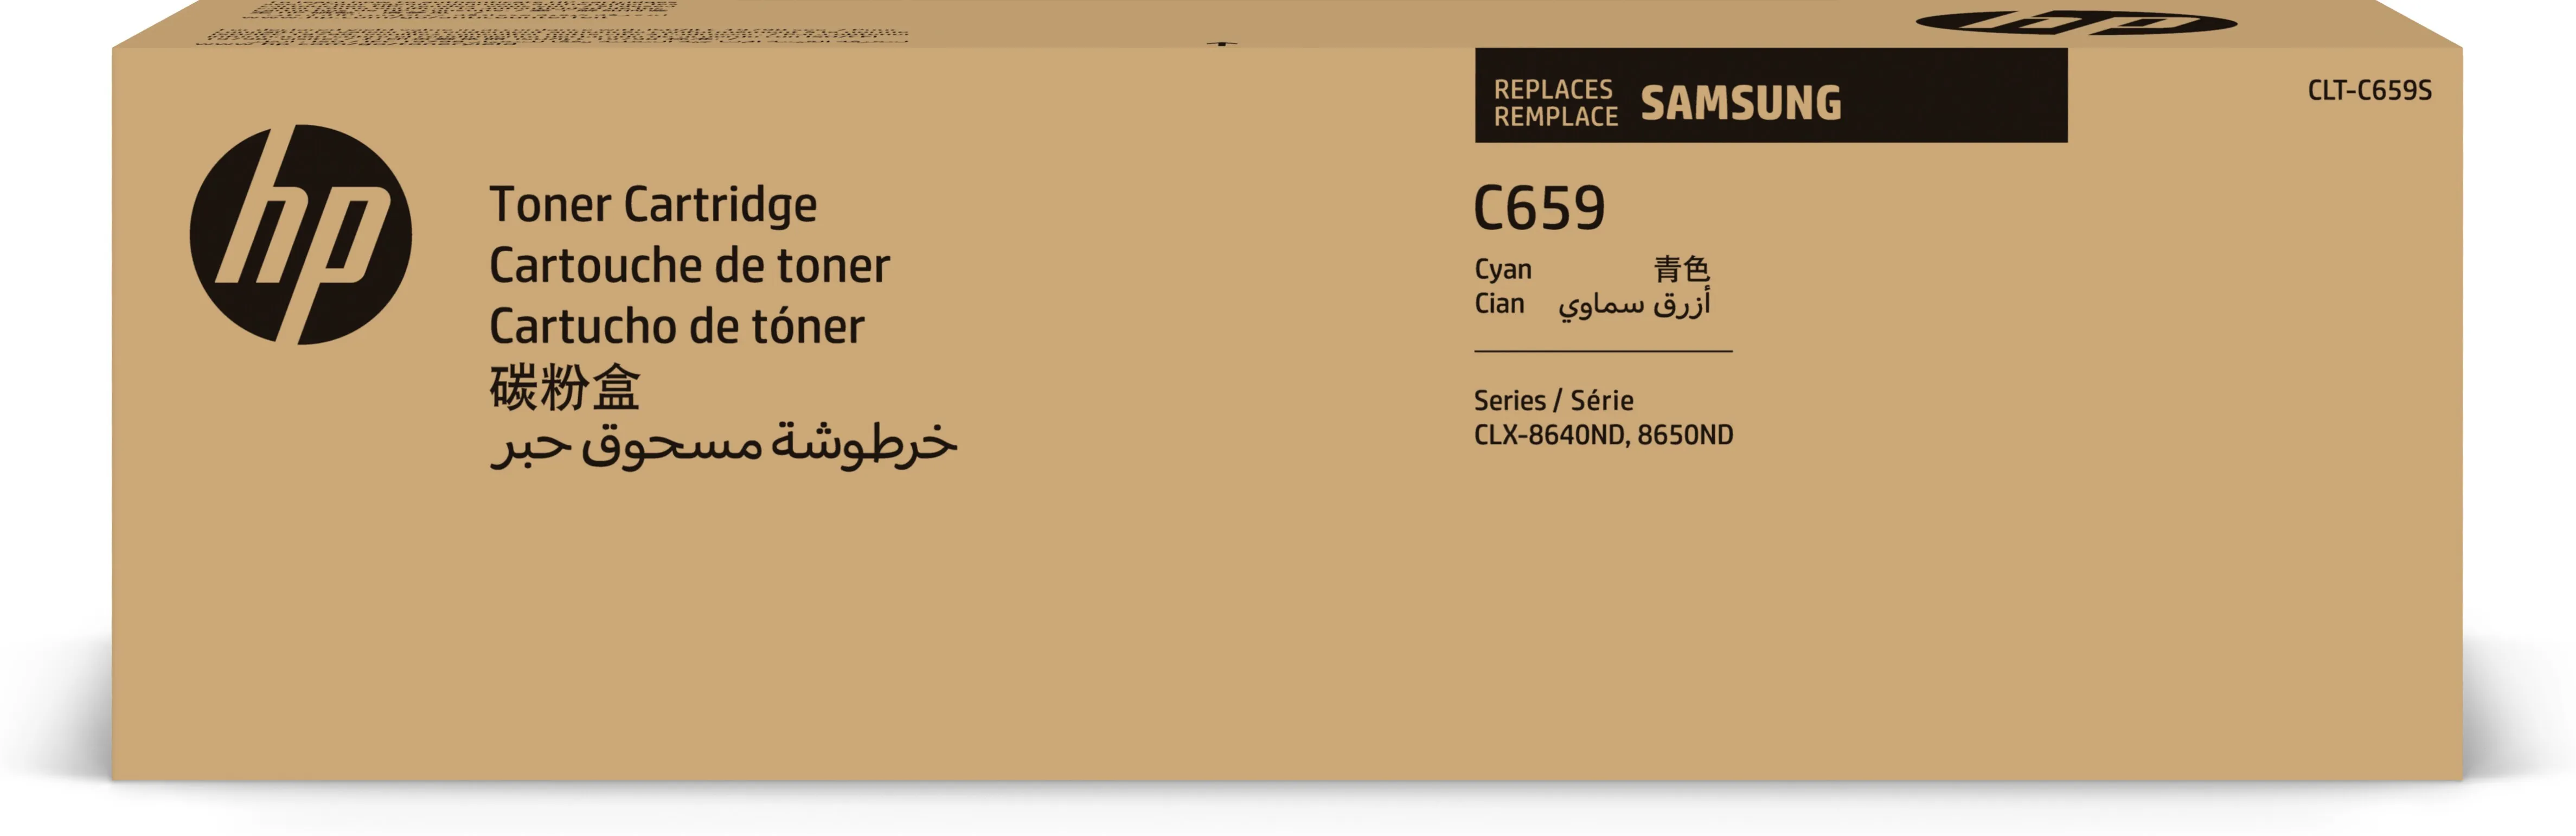 Vente SAMSUNG original Toner cartridge LT-Cartridge659S/ELS HP au meilleur prix - visuel 10